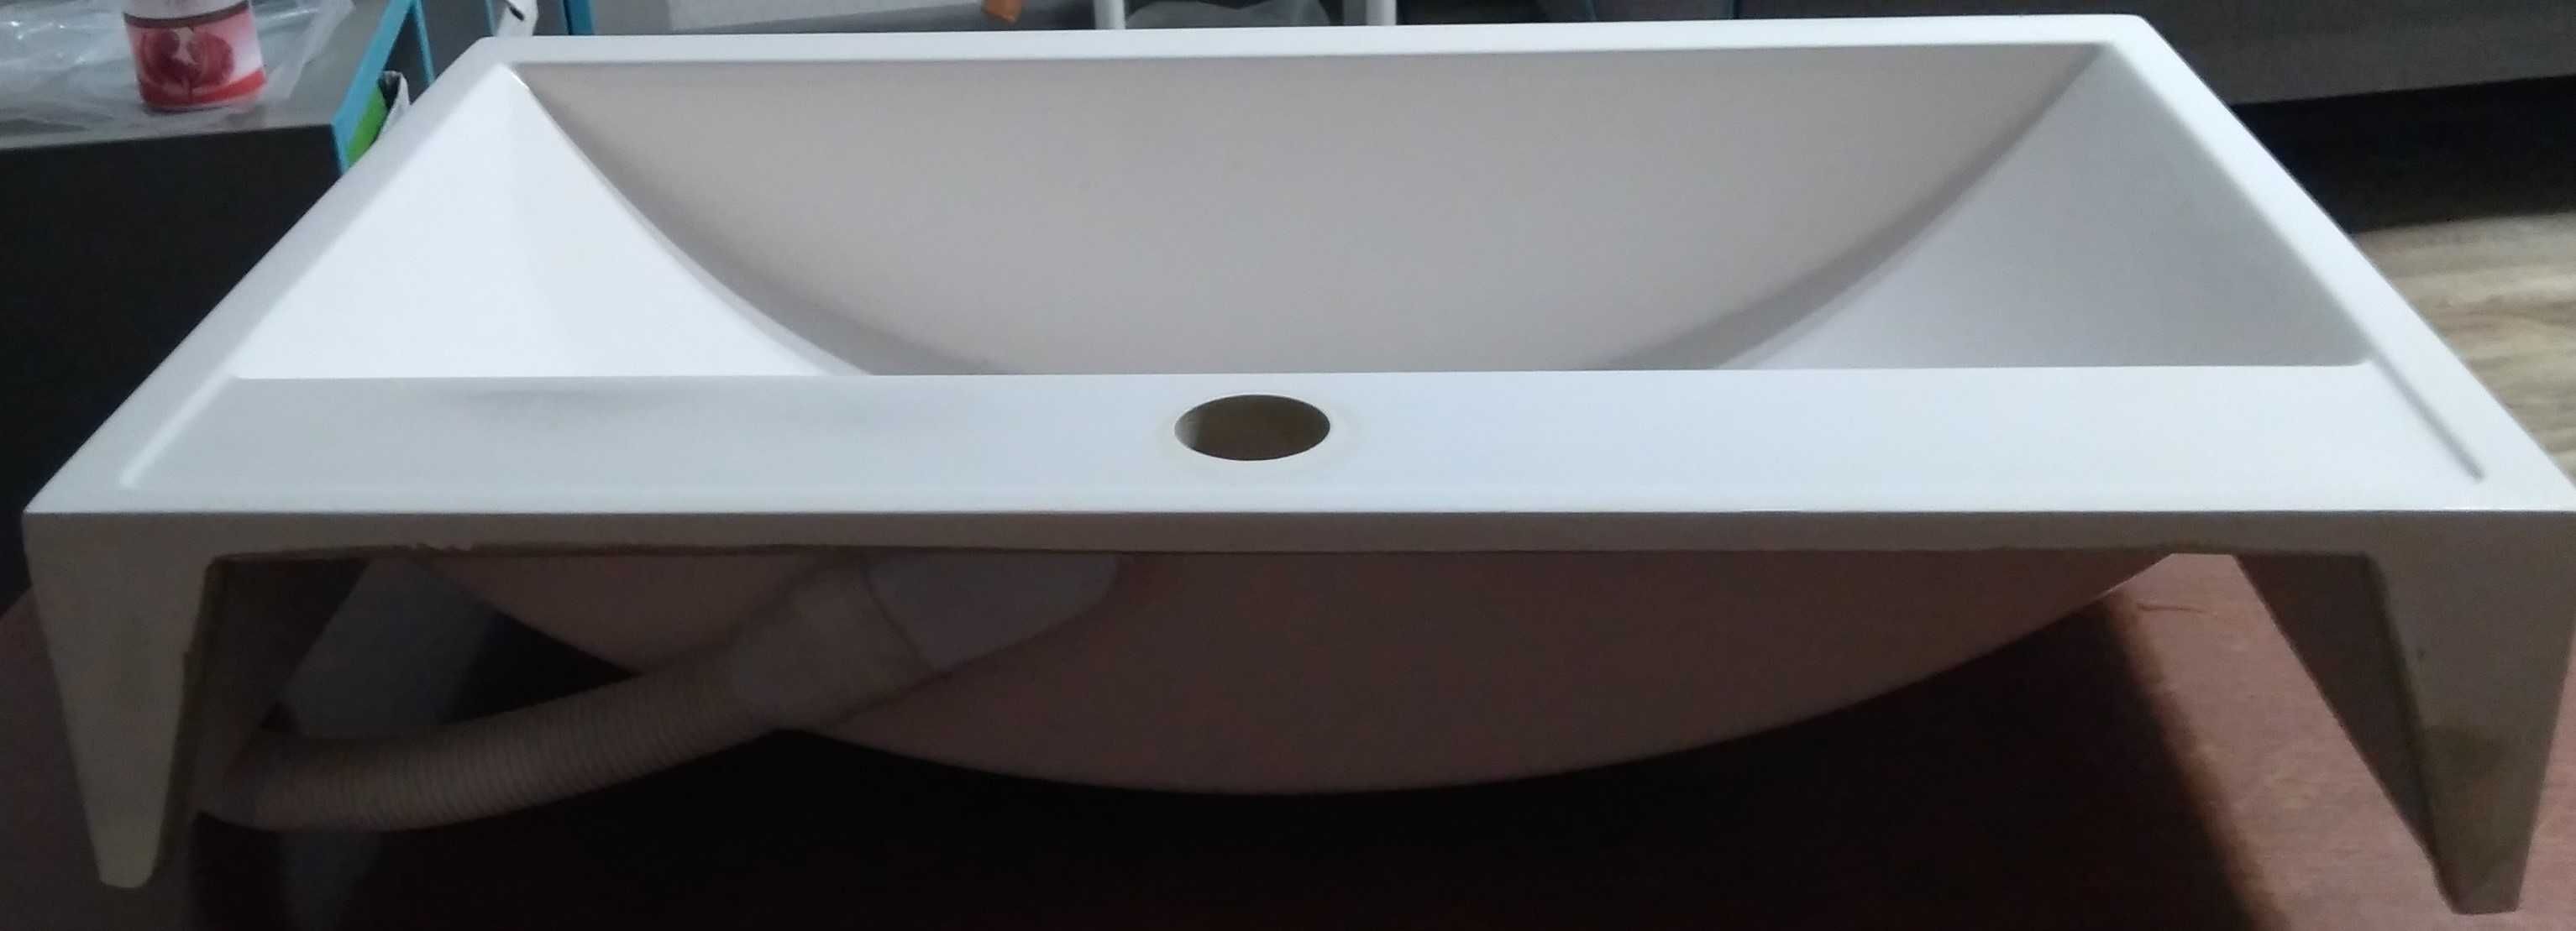 Раковина для ванной комнаты з литого мрамора Marmorin Польша.